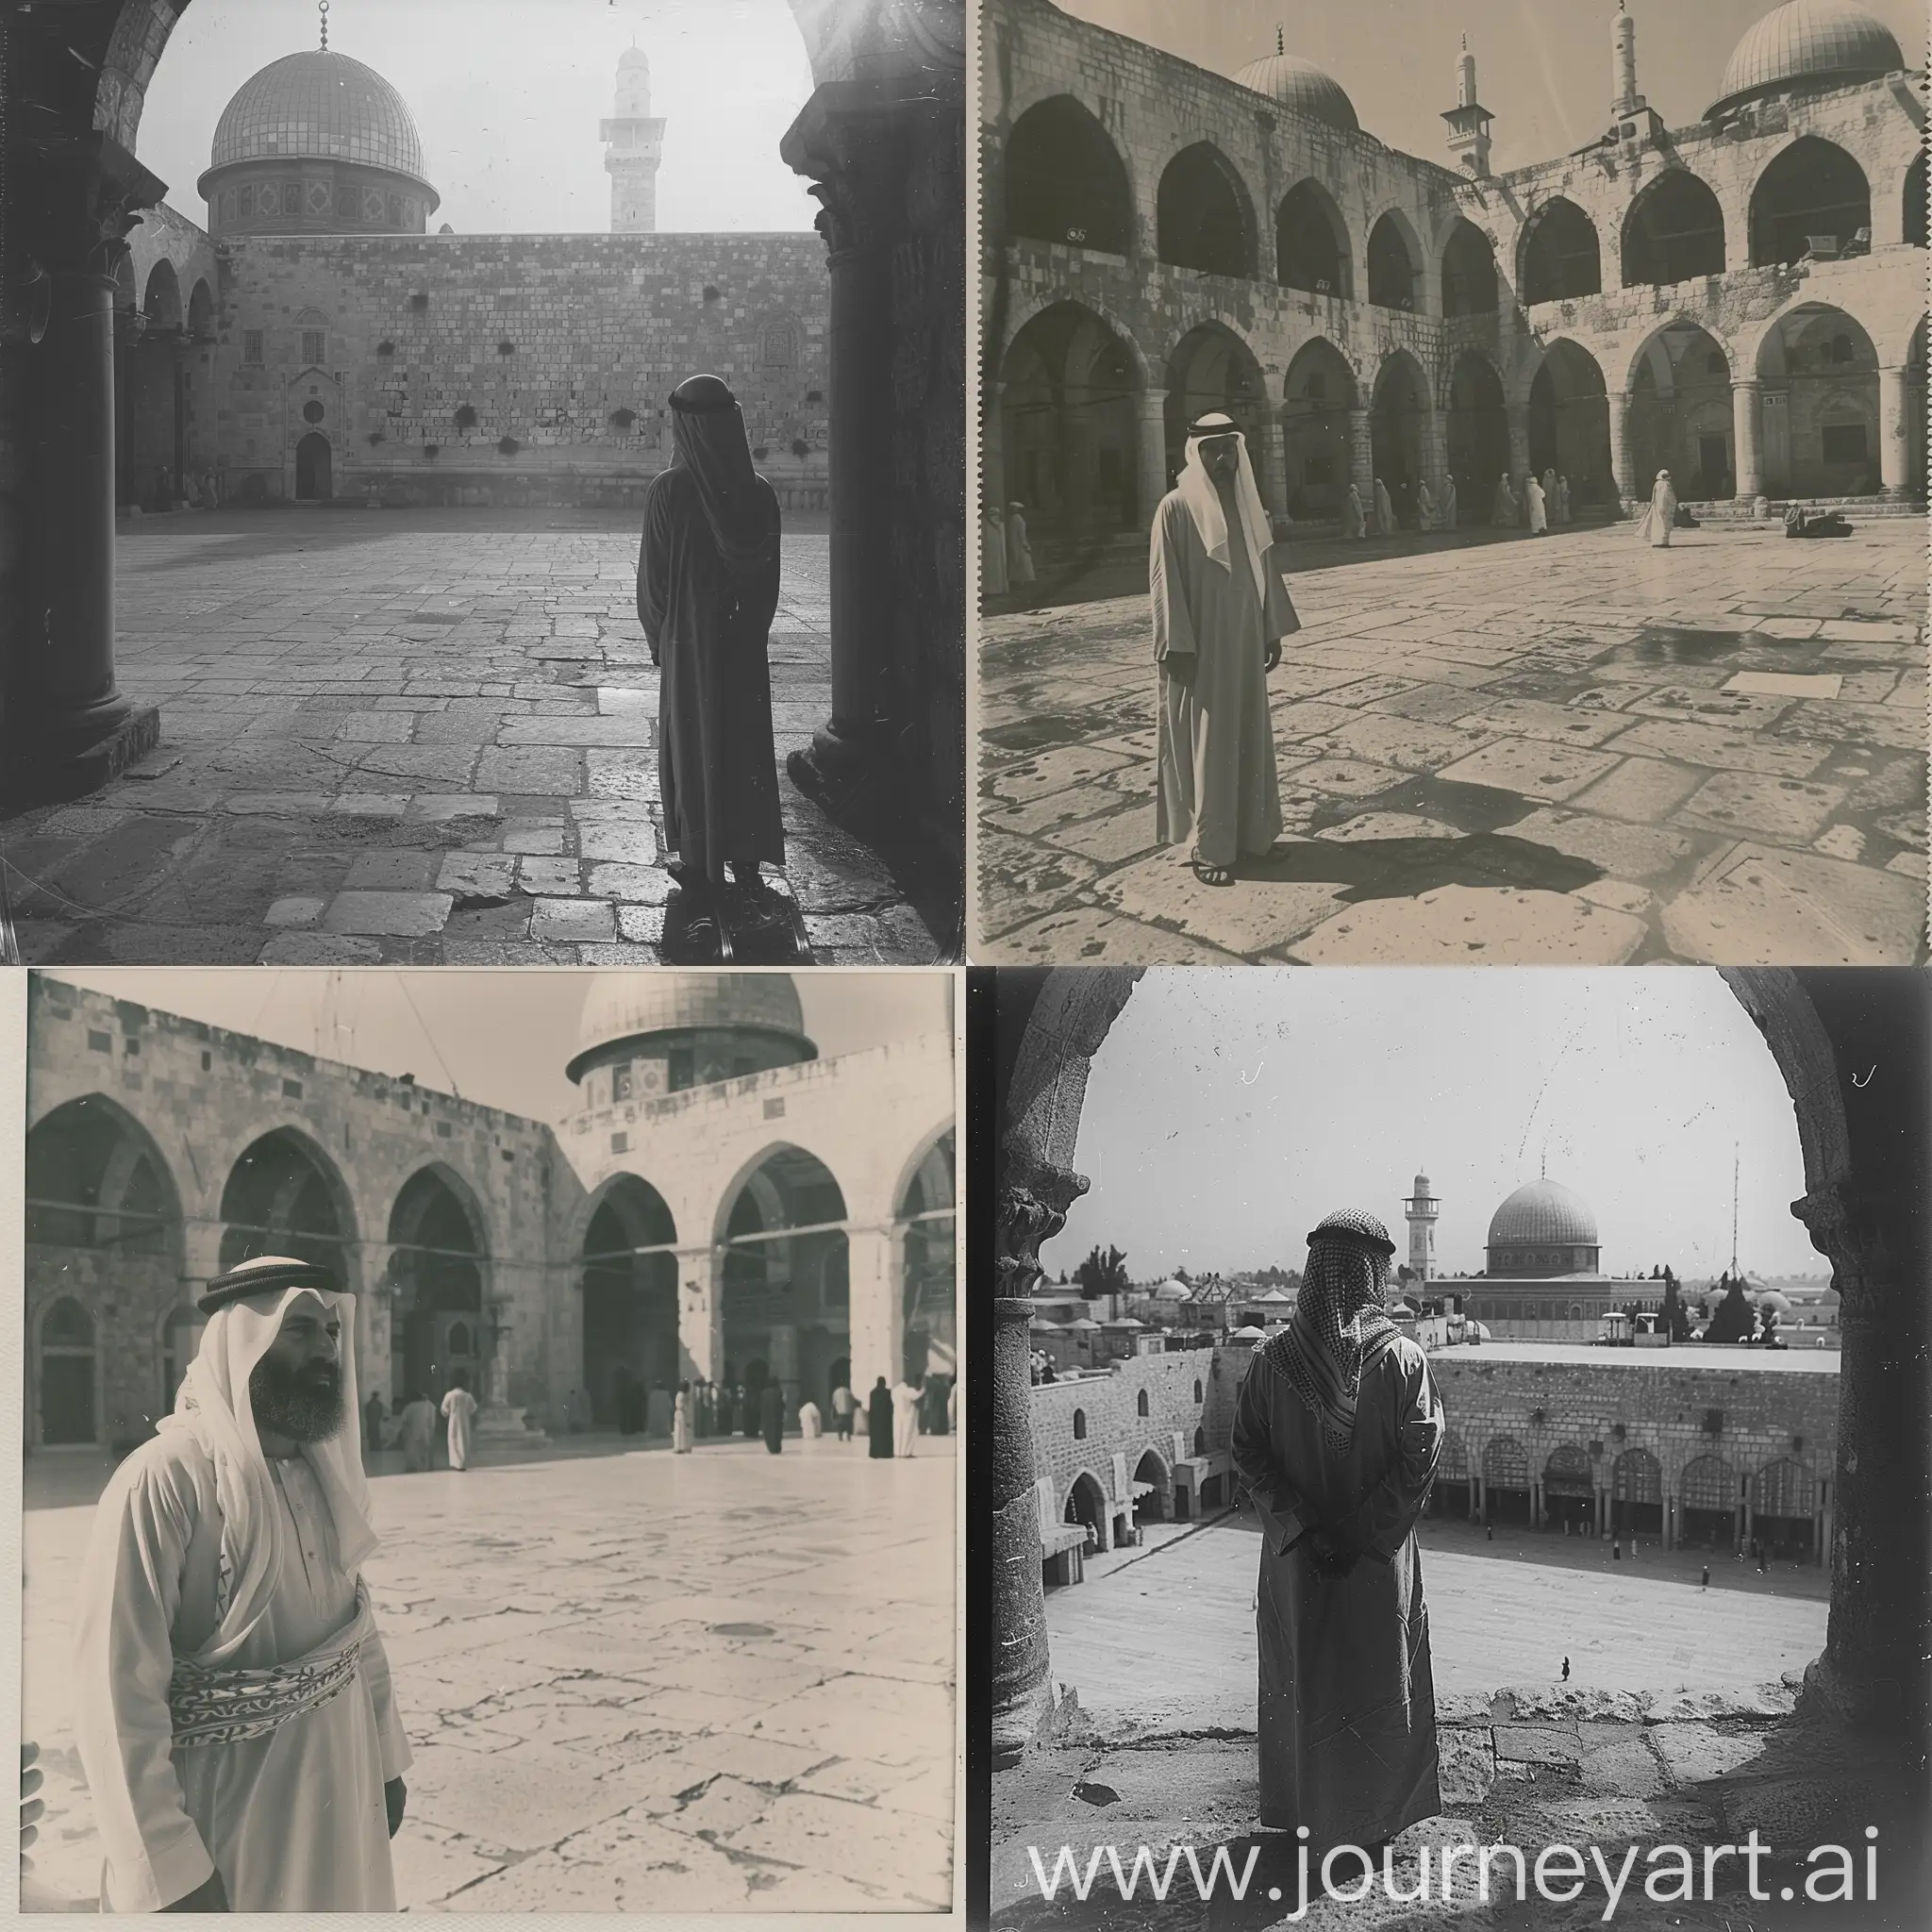 Arabian-Man-at-AlAqsa-Mosque-1970s-Vintage-Polaroid-Capture